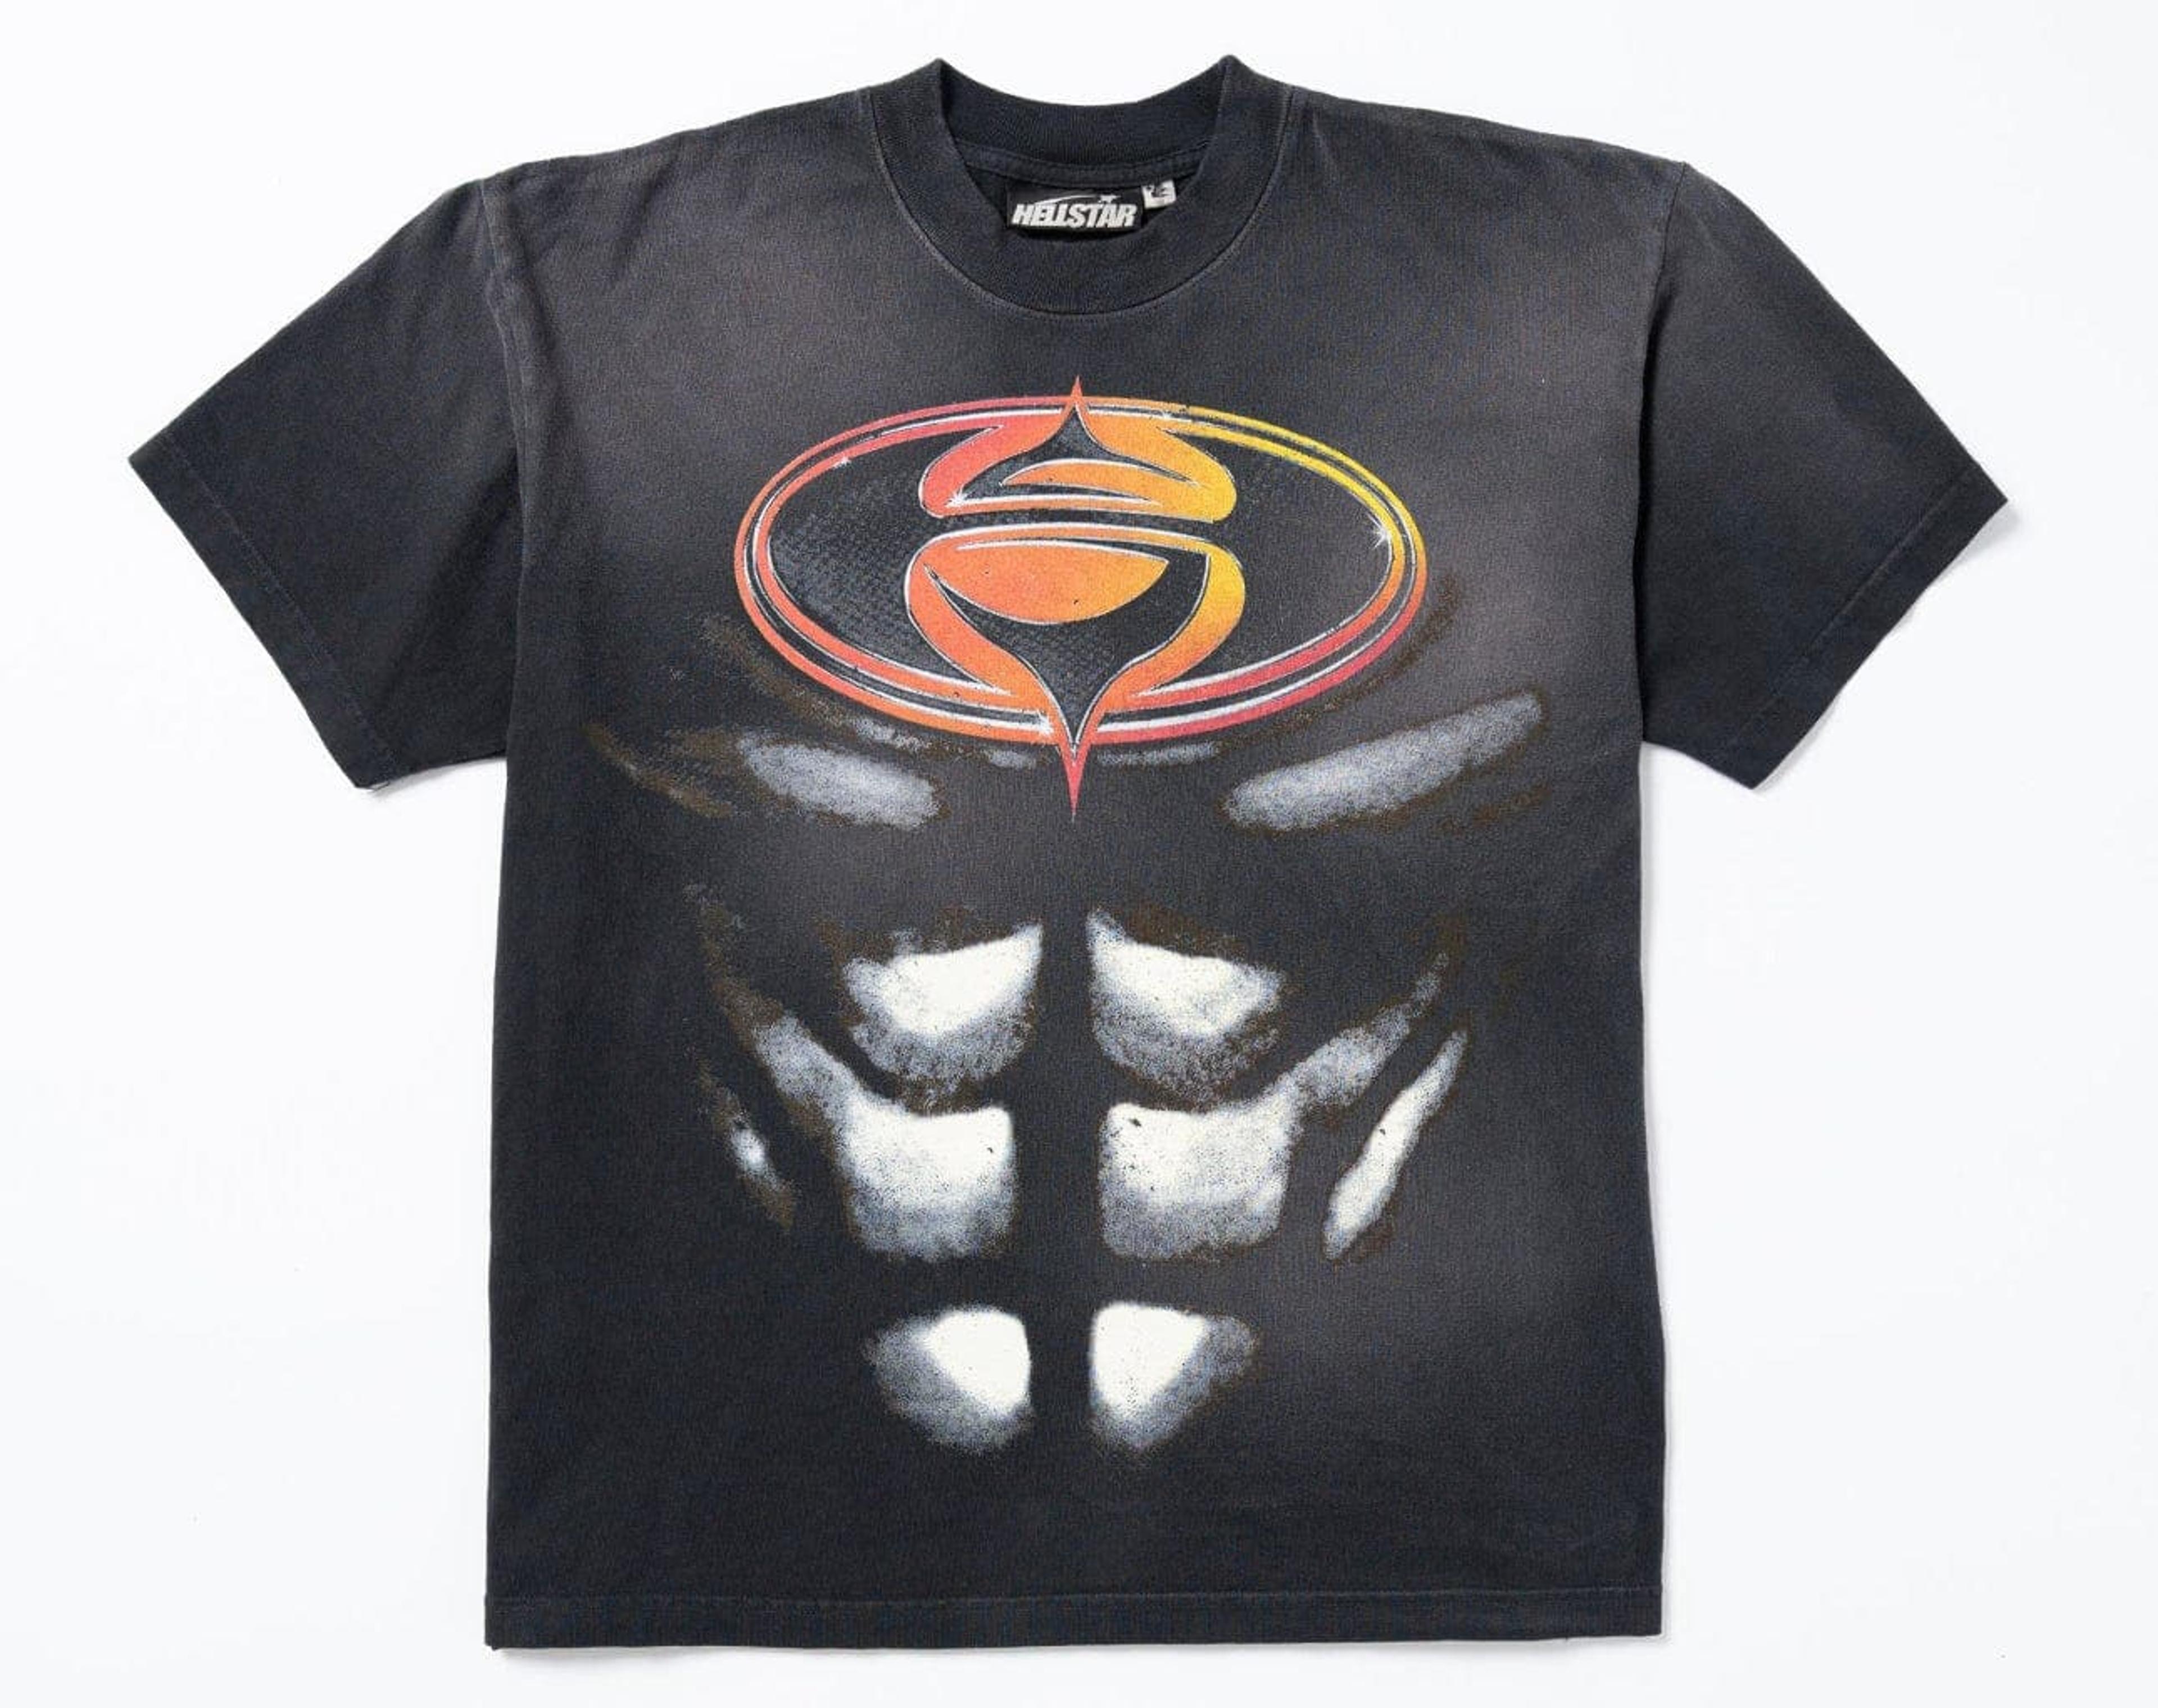 Hellstar Studios Superhero Short Sleeve Tee Shirt Black